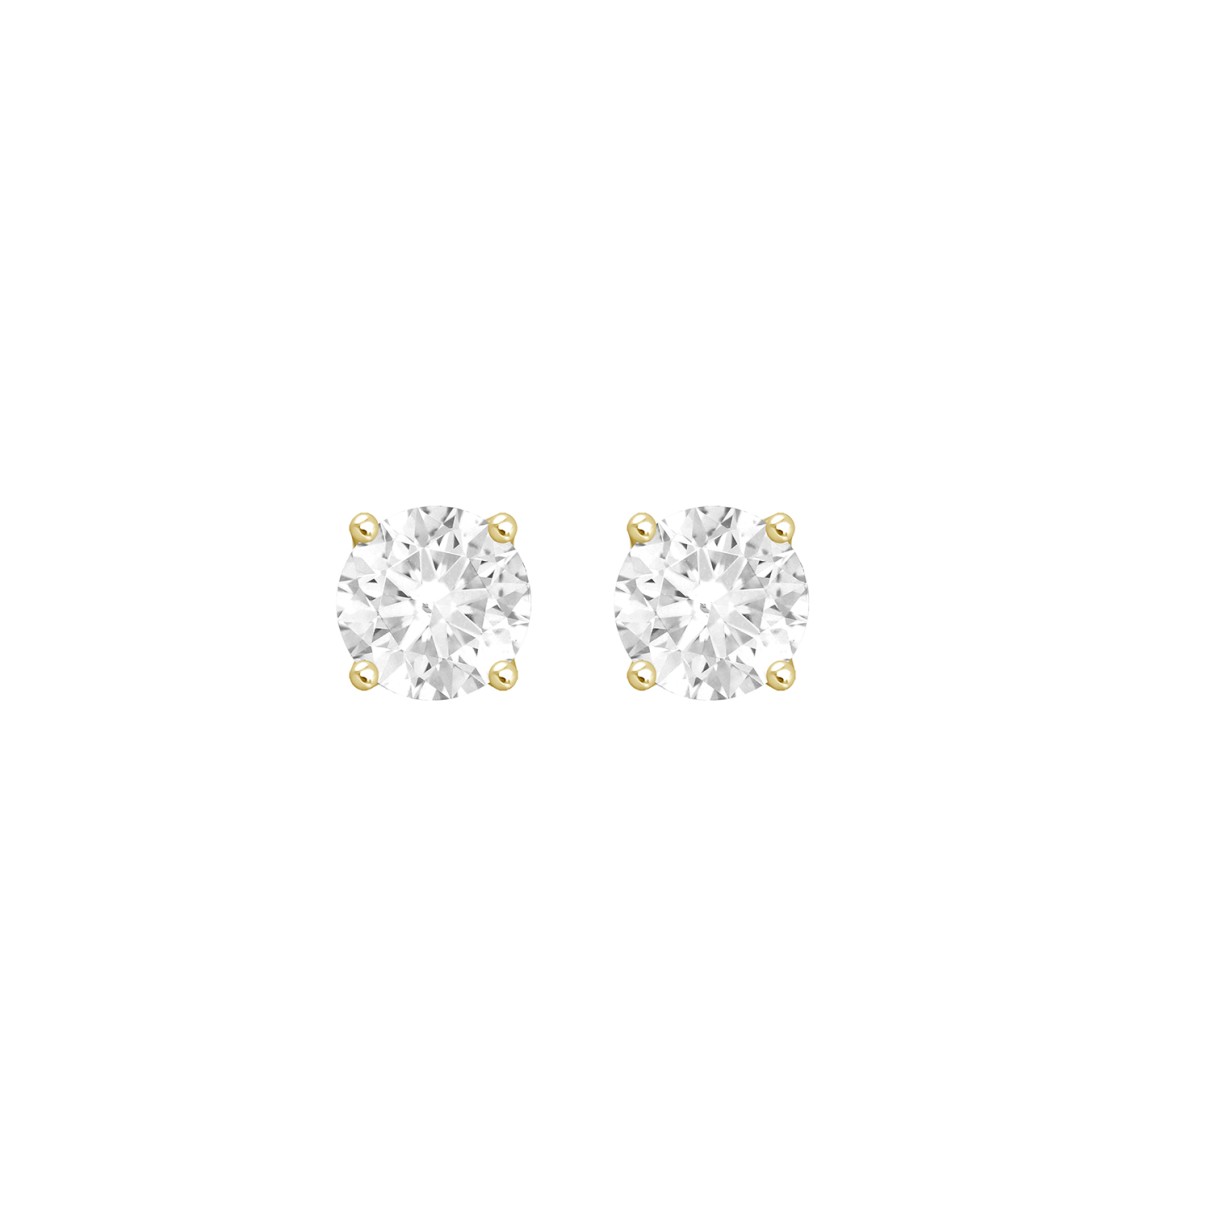 LADIES EARRINGS 1 1/2CT ROUND DIAMOND 14K YELLOW GOLD